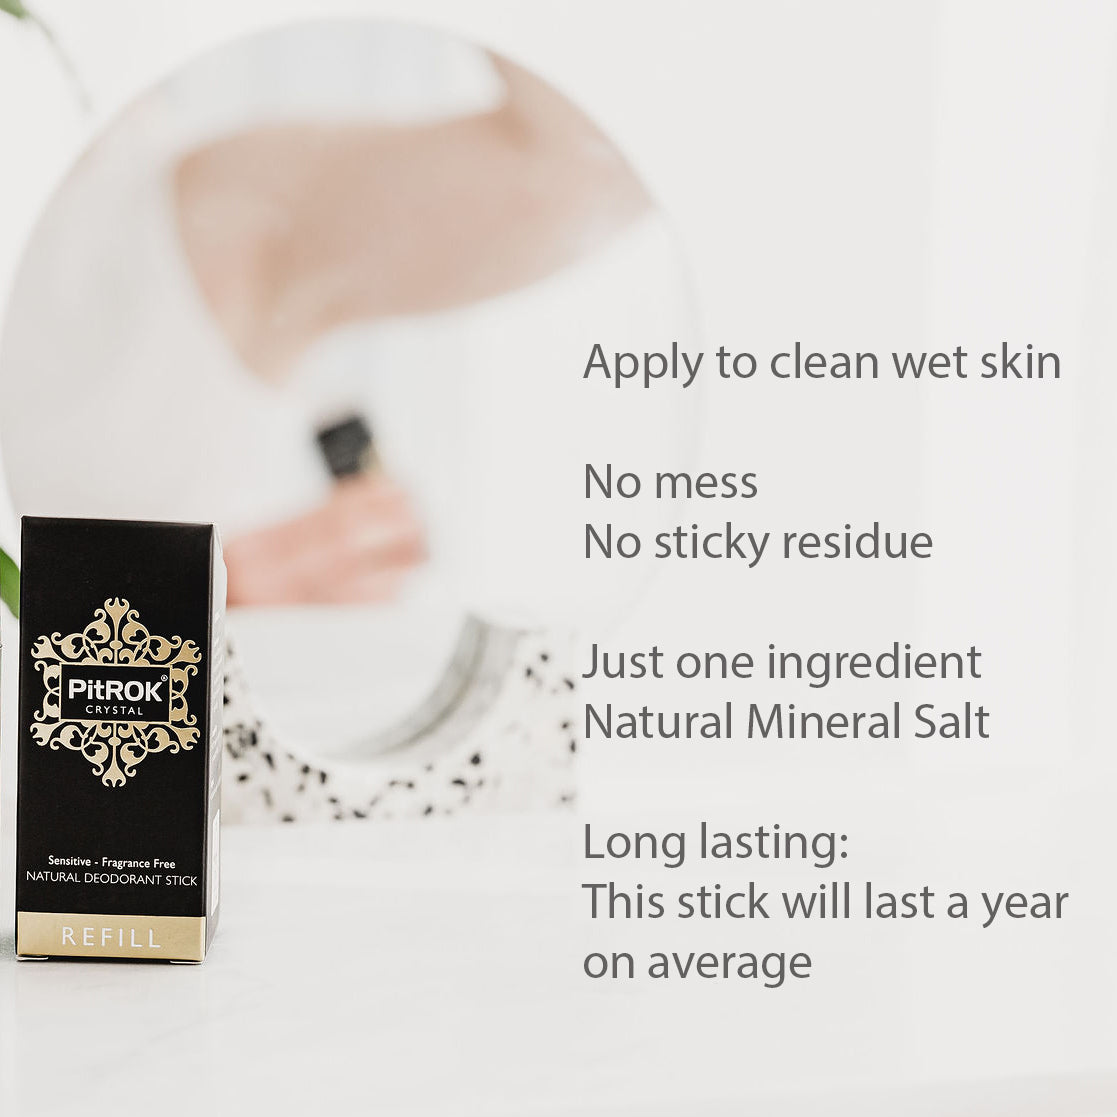 PitROK Crystal Natural Deodorant Stick 100g REFILL (Fragrance Free / Gender Neutral)